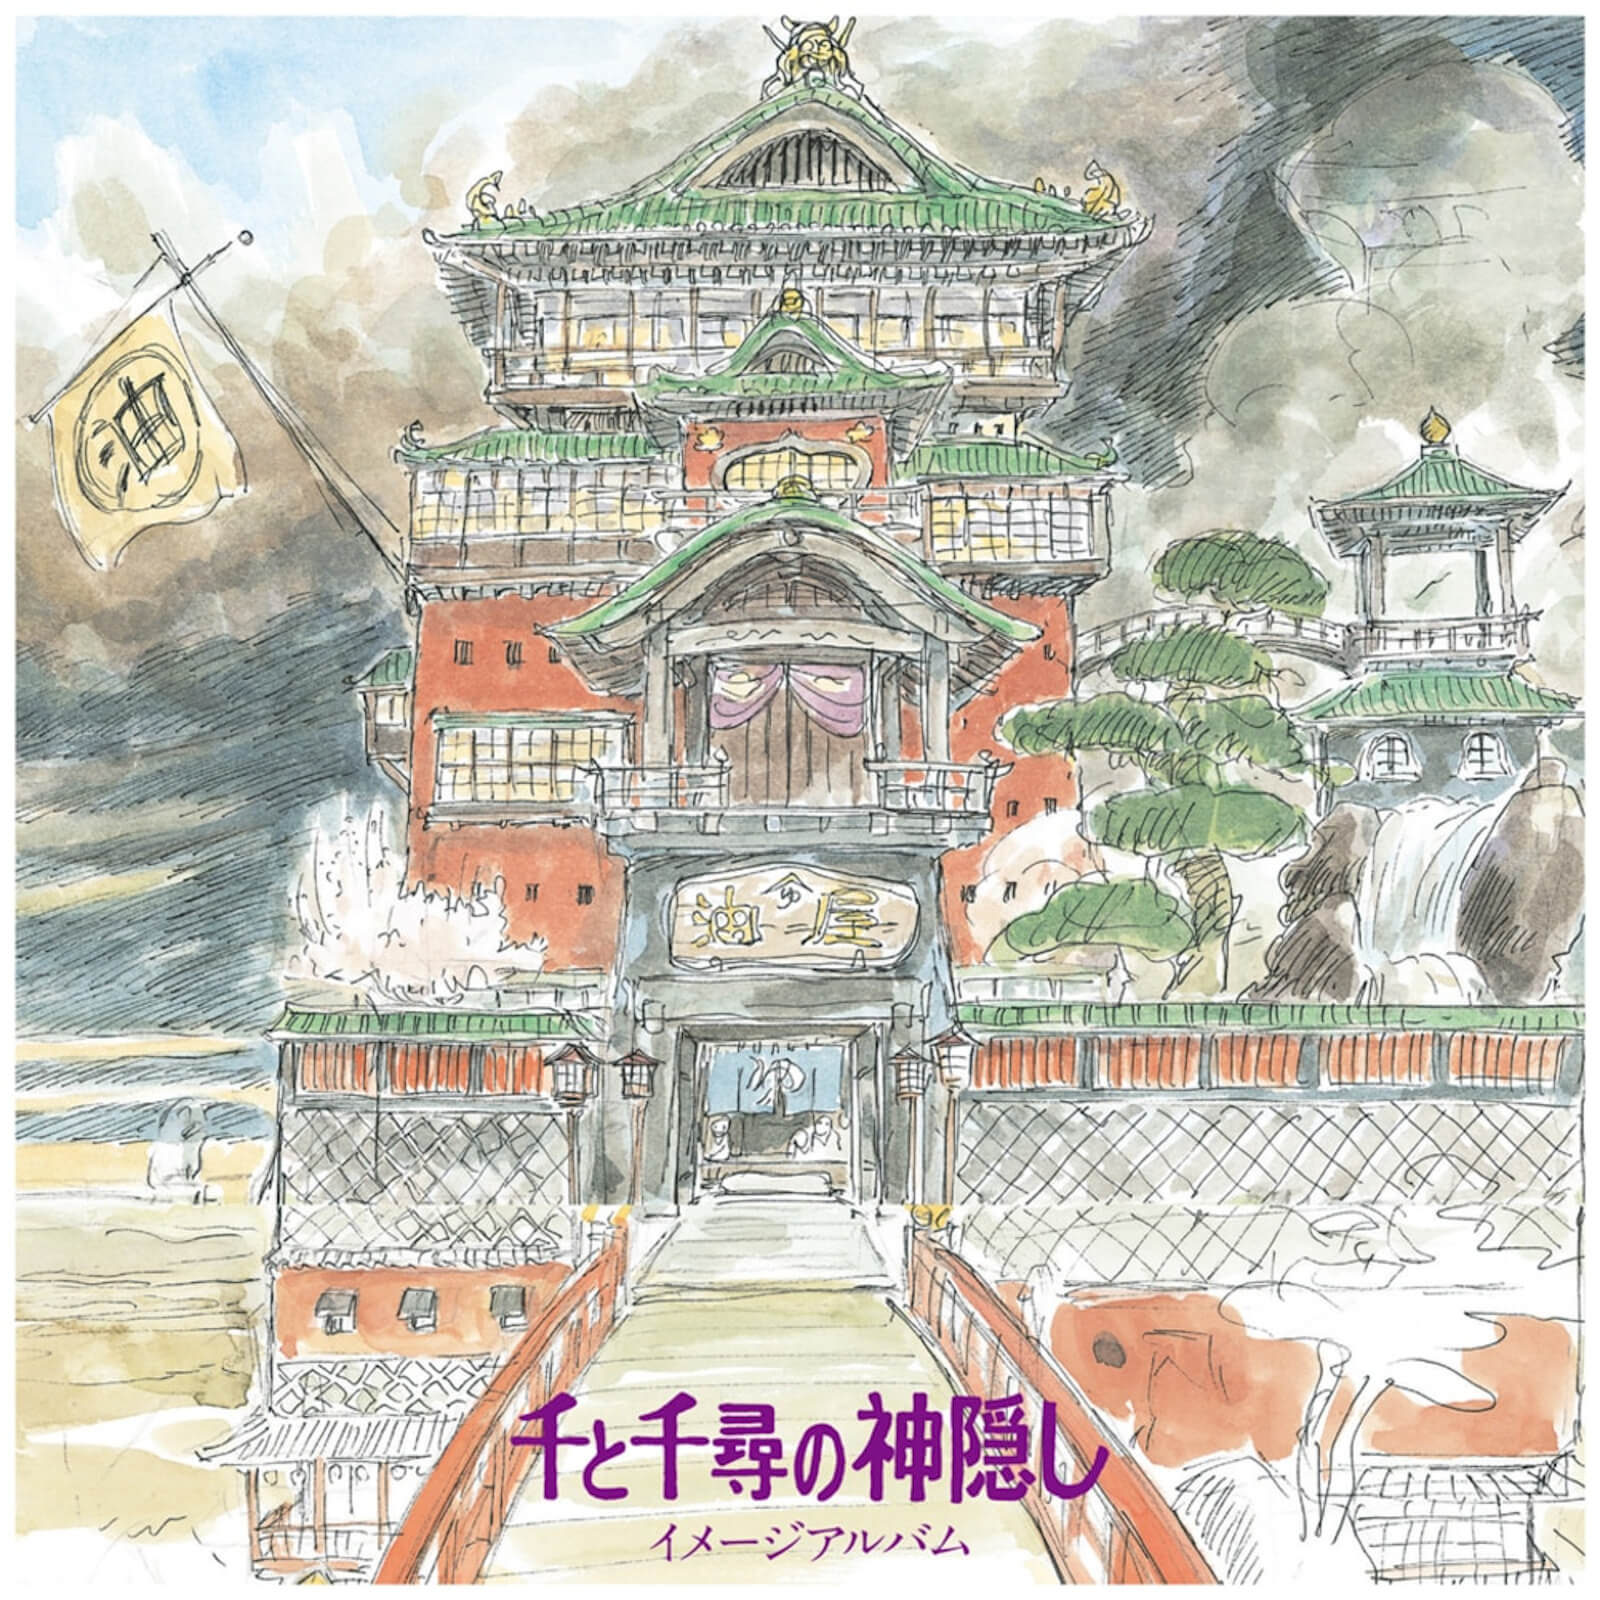 Studio Ghibli Spirited Away Image Album Vinyl